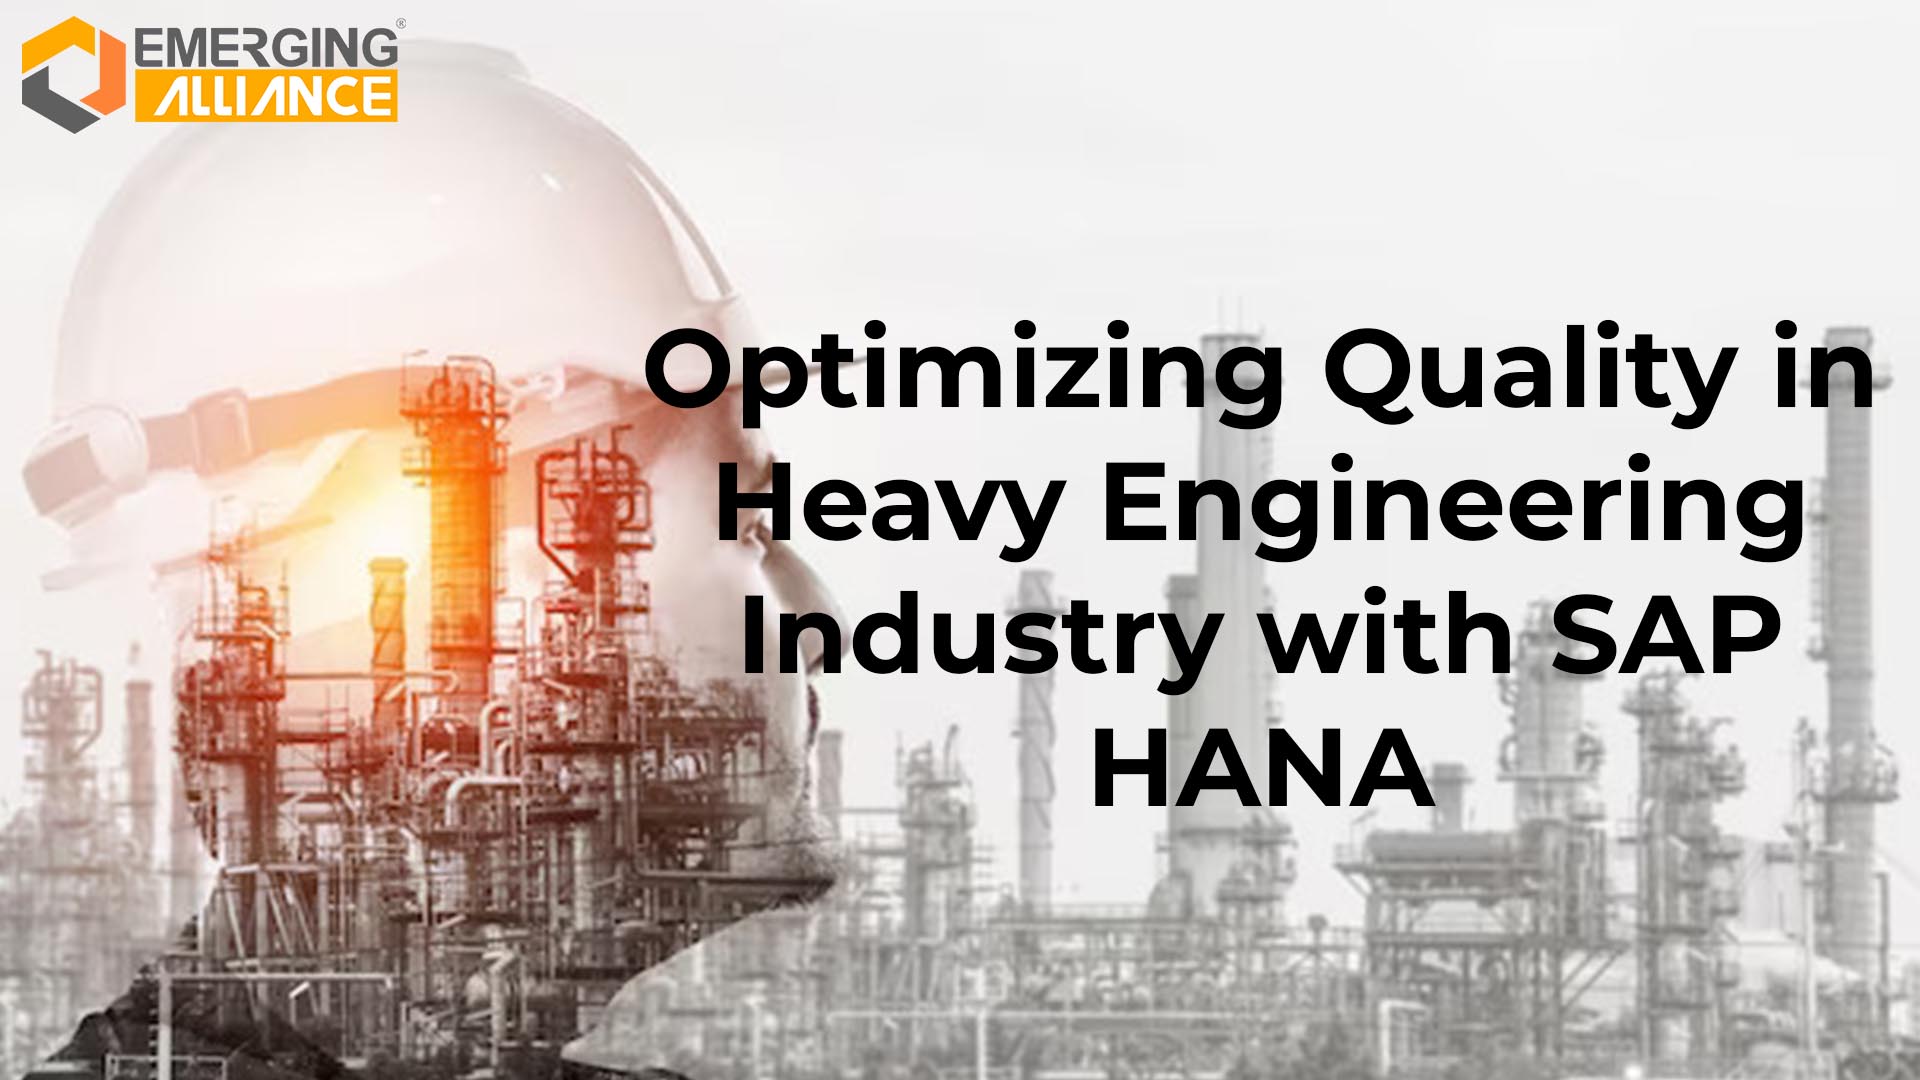 SAP HANA for Heavy Engineering Industry